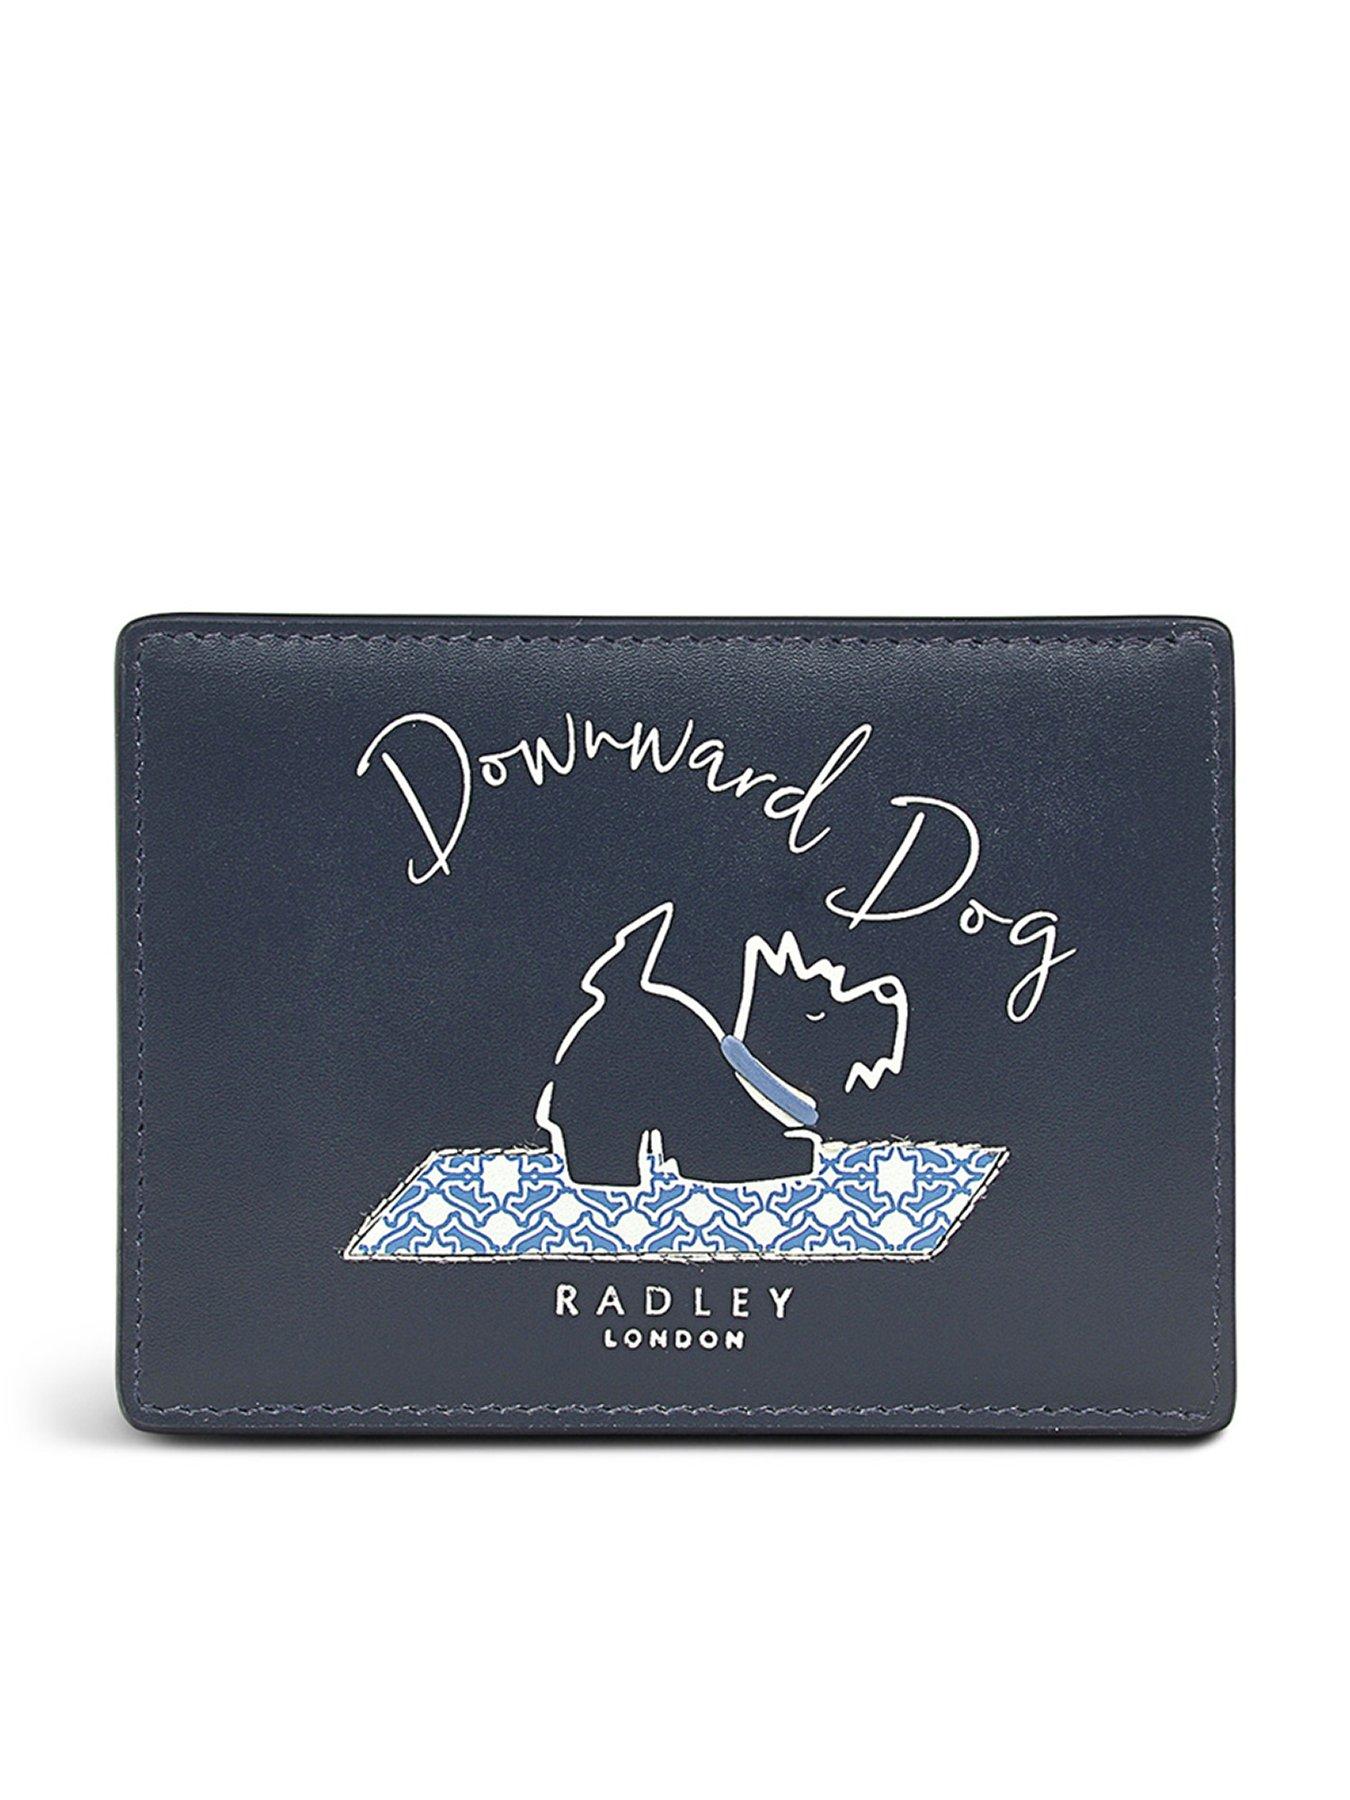  Yoga Dog Leather Small Cardholder - Ink